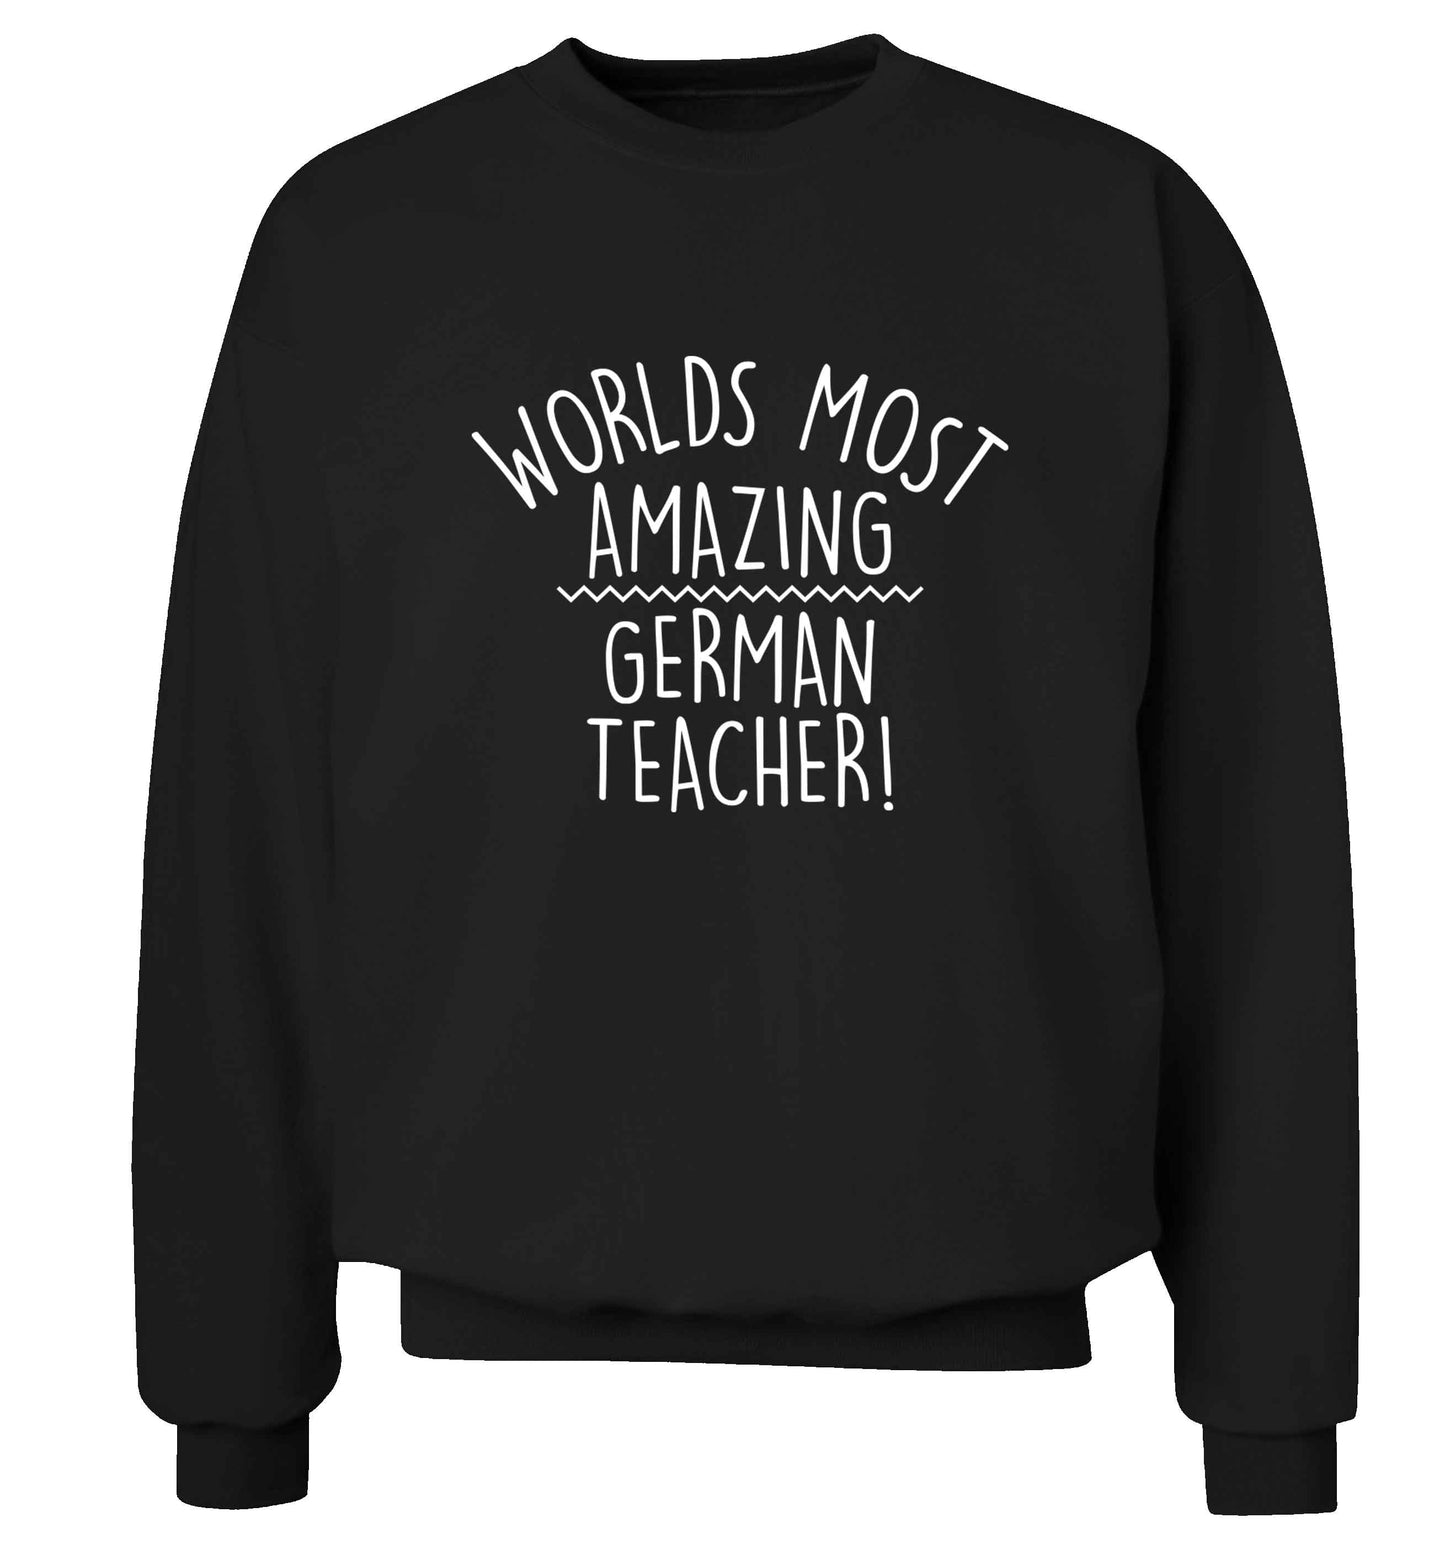 Worlds most amazing German teacher adult's unisex black sweater 2XL